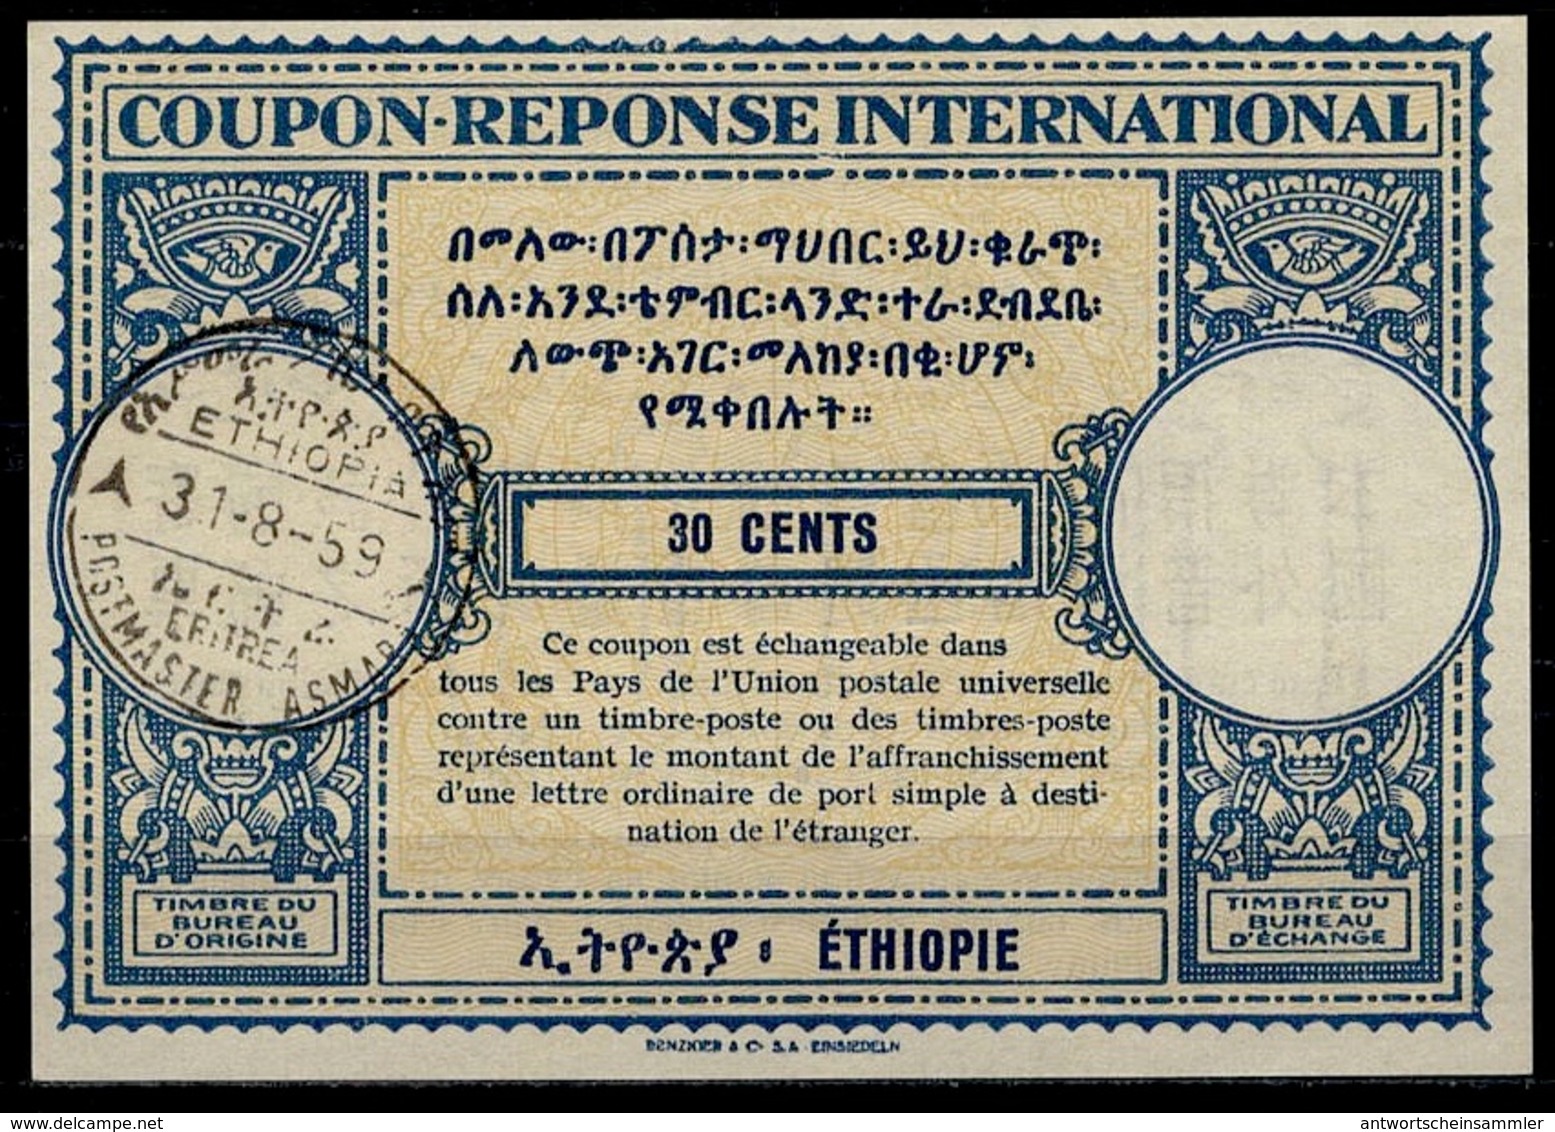 ERYTHREE / ERITREA / ETHIOPIA  Lo15  30 CENTS  International Reply Coupon Reponse IRC Antwortschein O ASMARA 31.8.59 - Eritrea